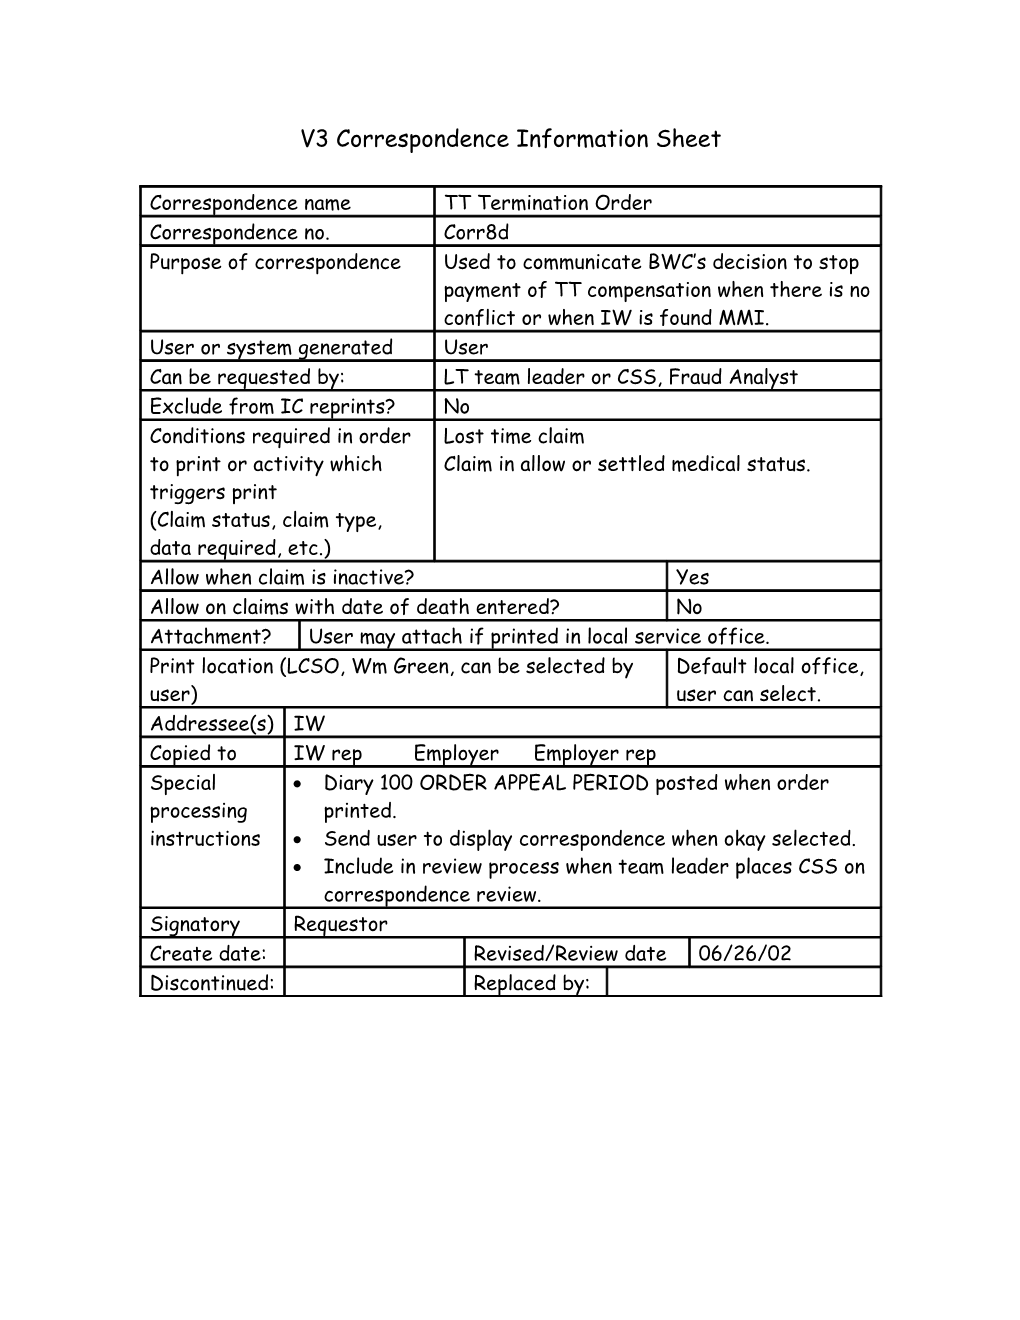 V3 Correspondence Information Sheet s1